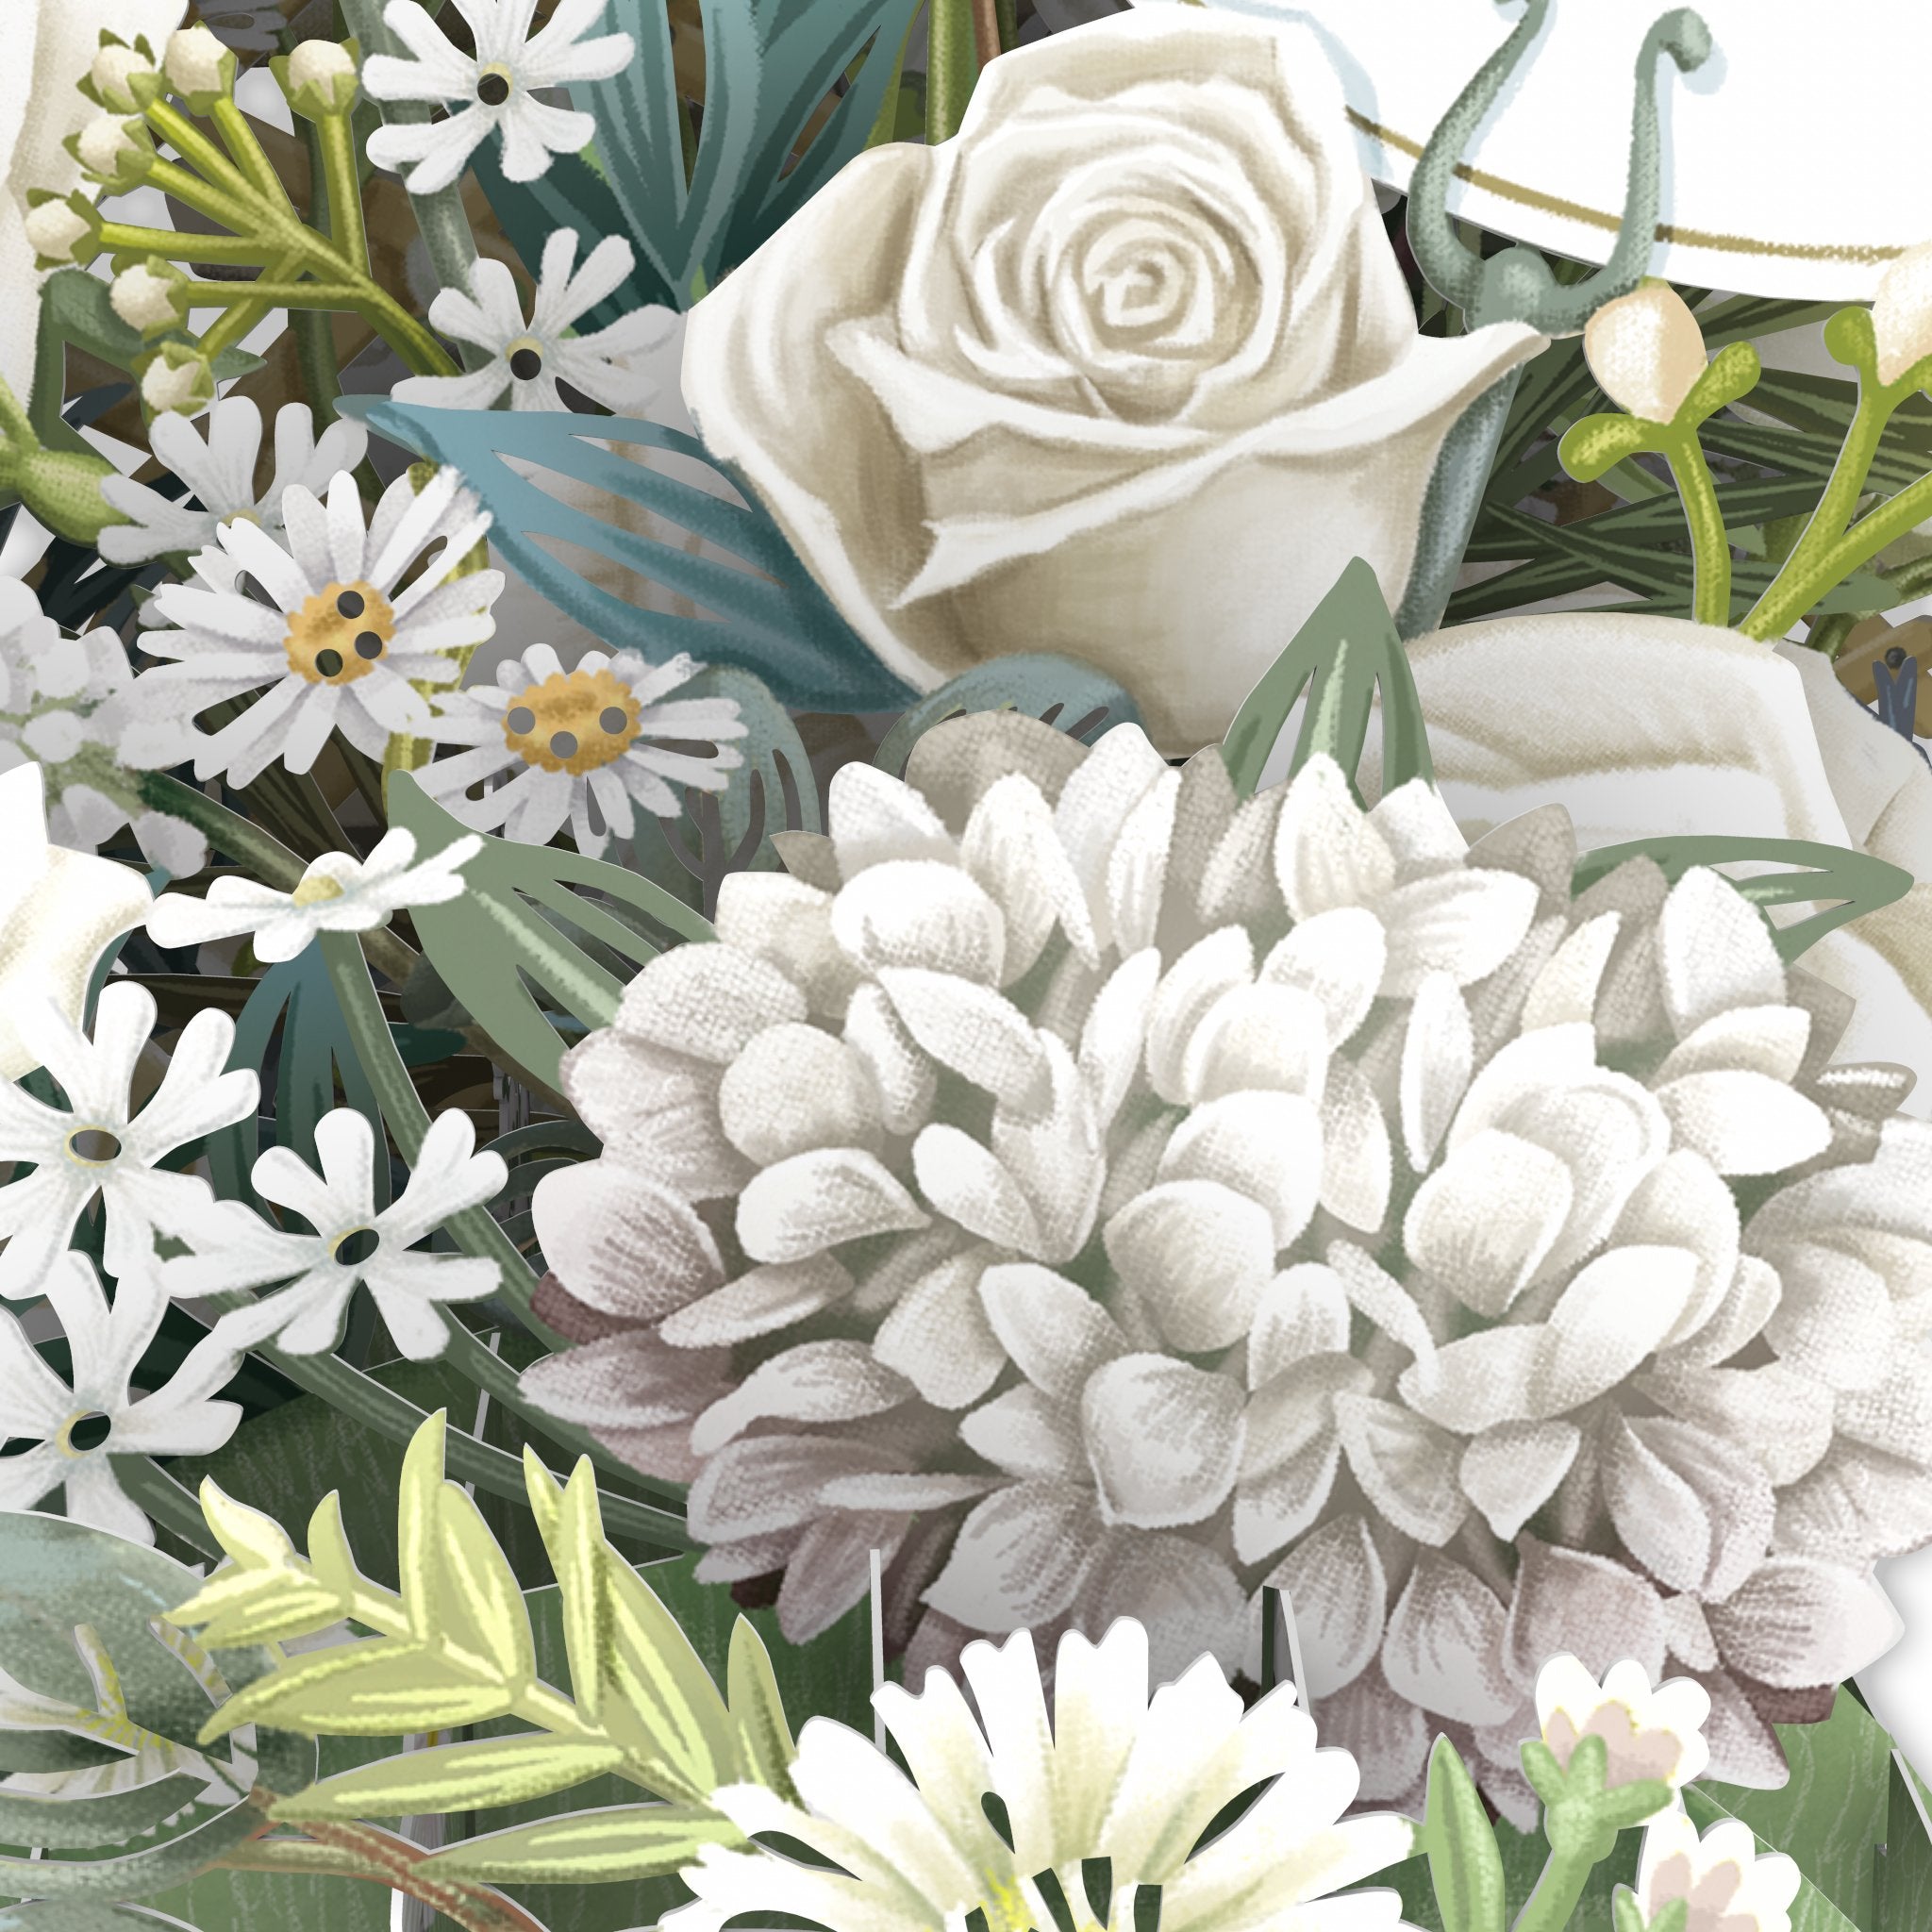 Happy Birthday White Flowers 3D Pop Up Card